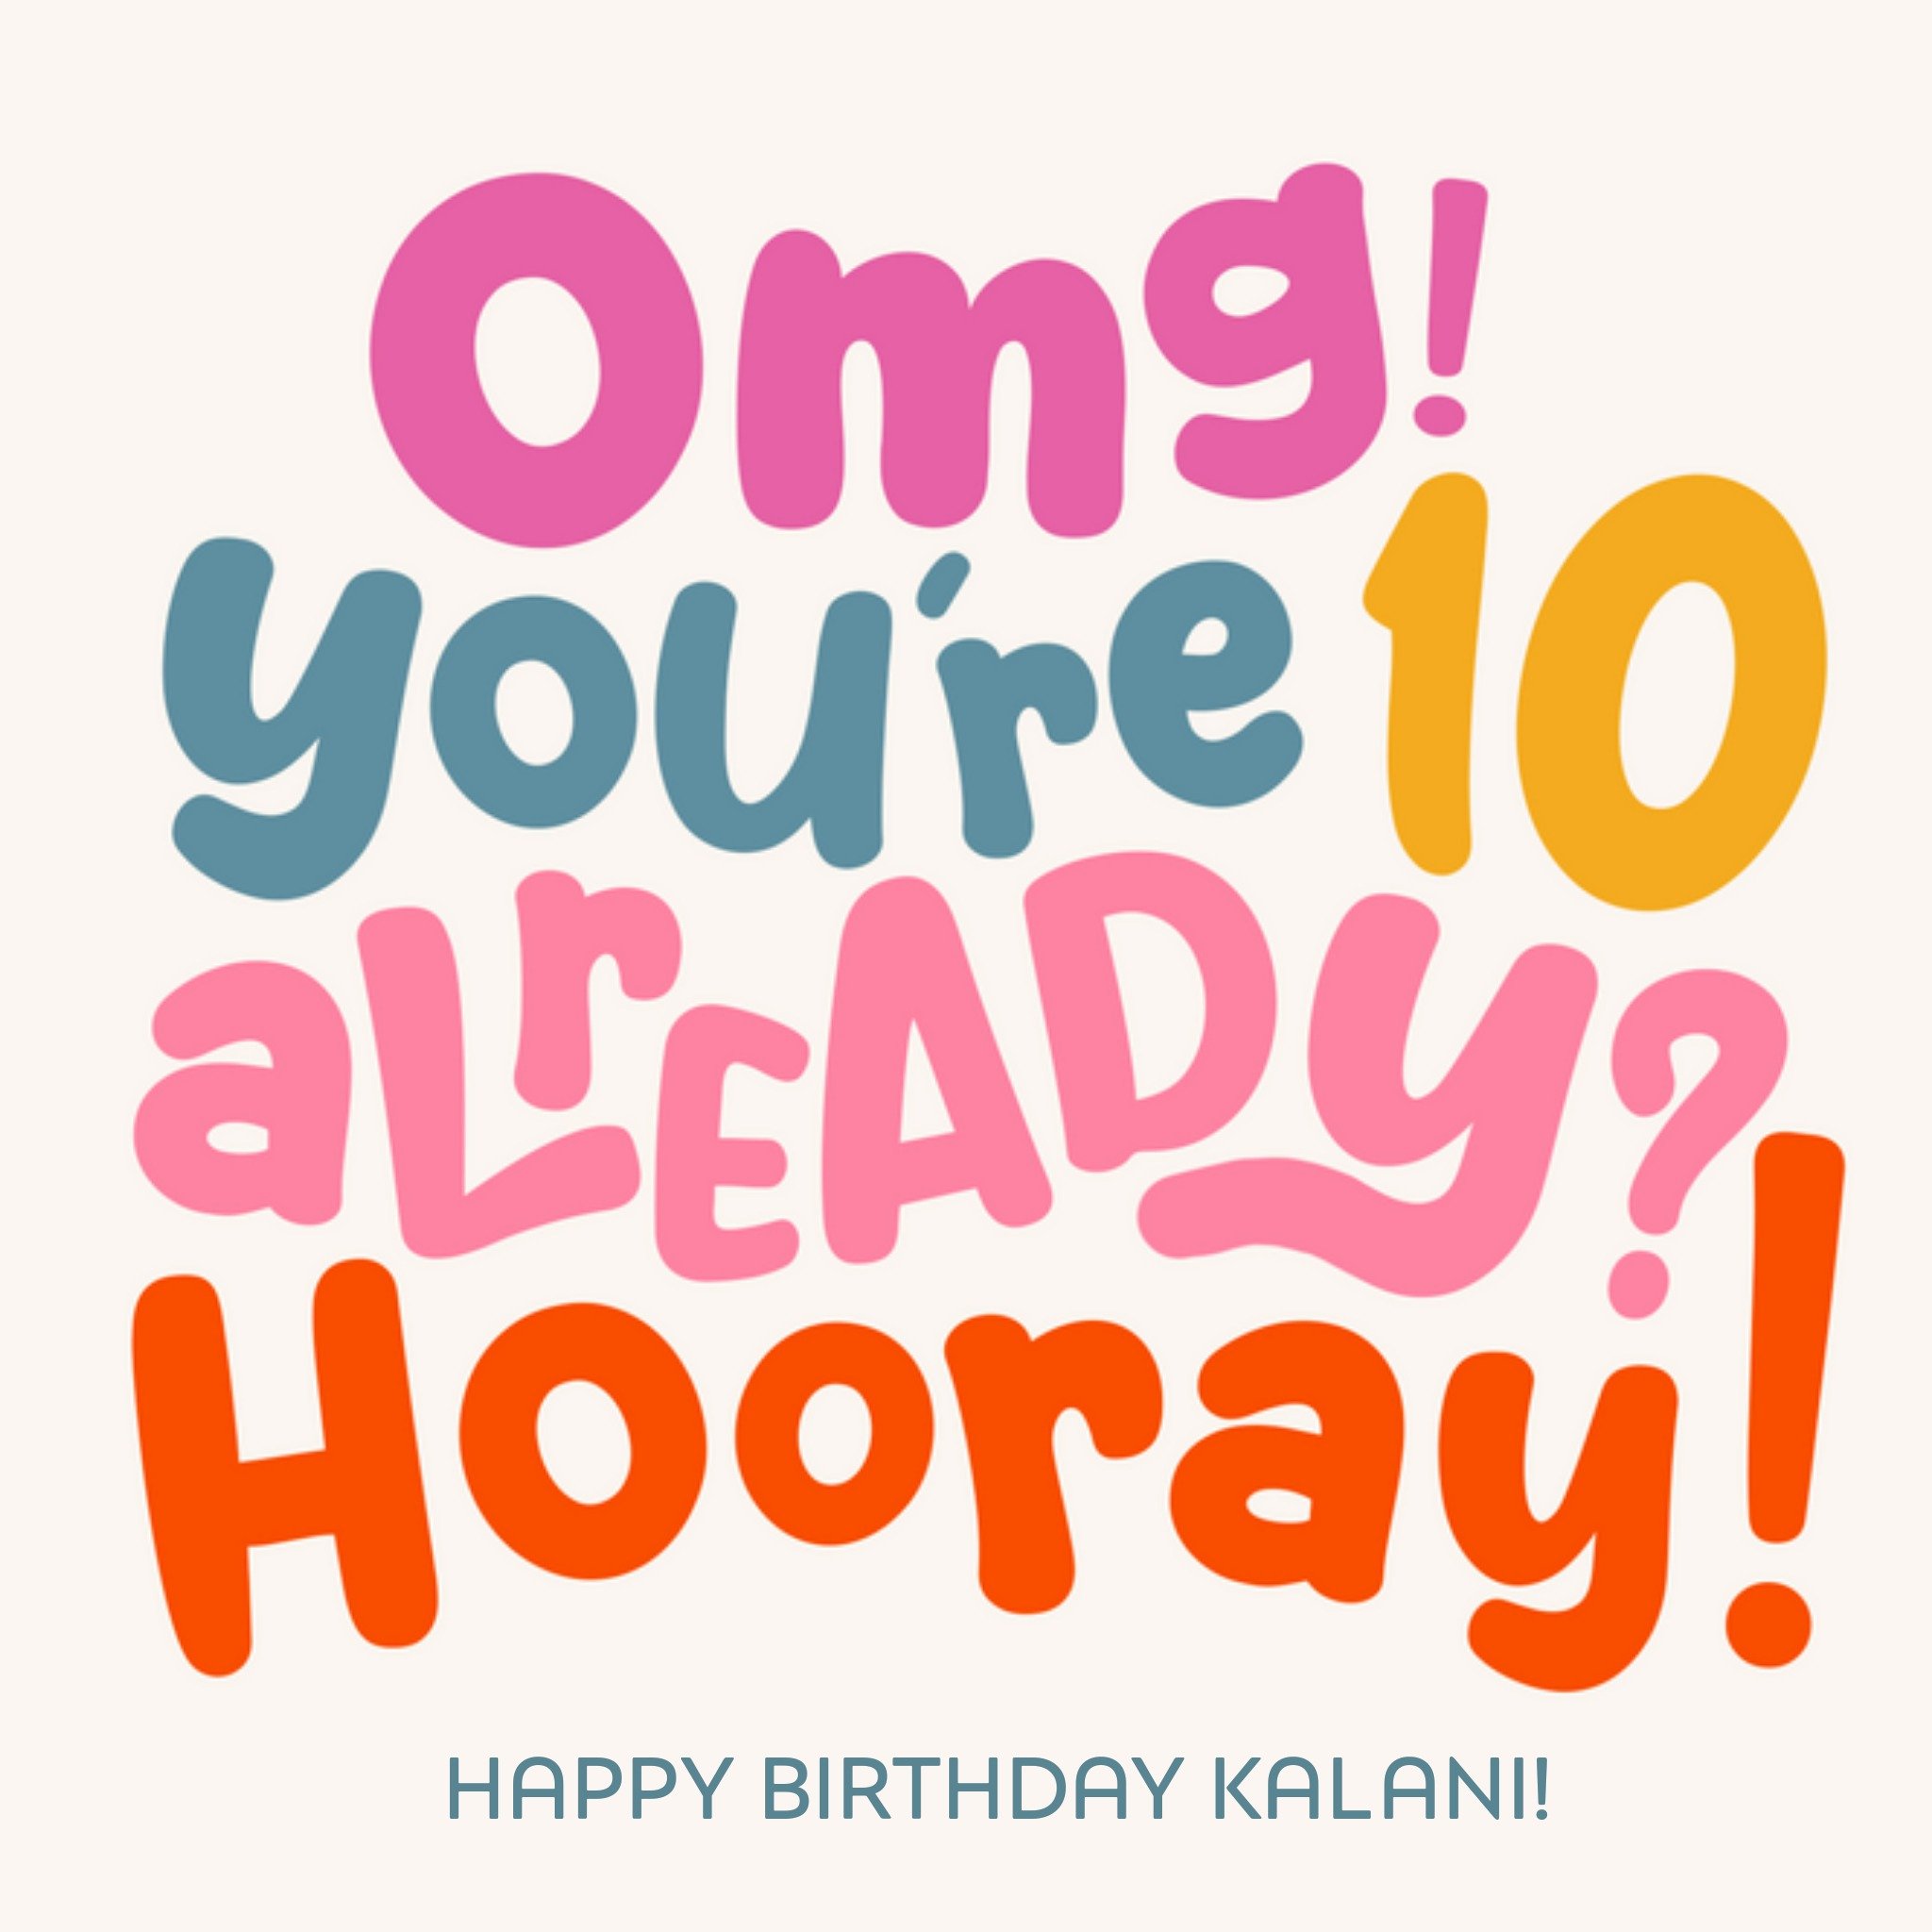 Moonpig Omg You're 10 Already Hooray Birthday Card, Large